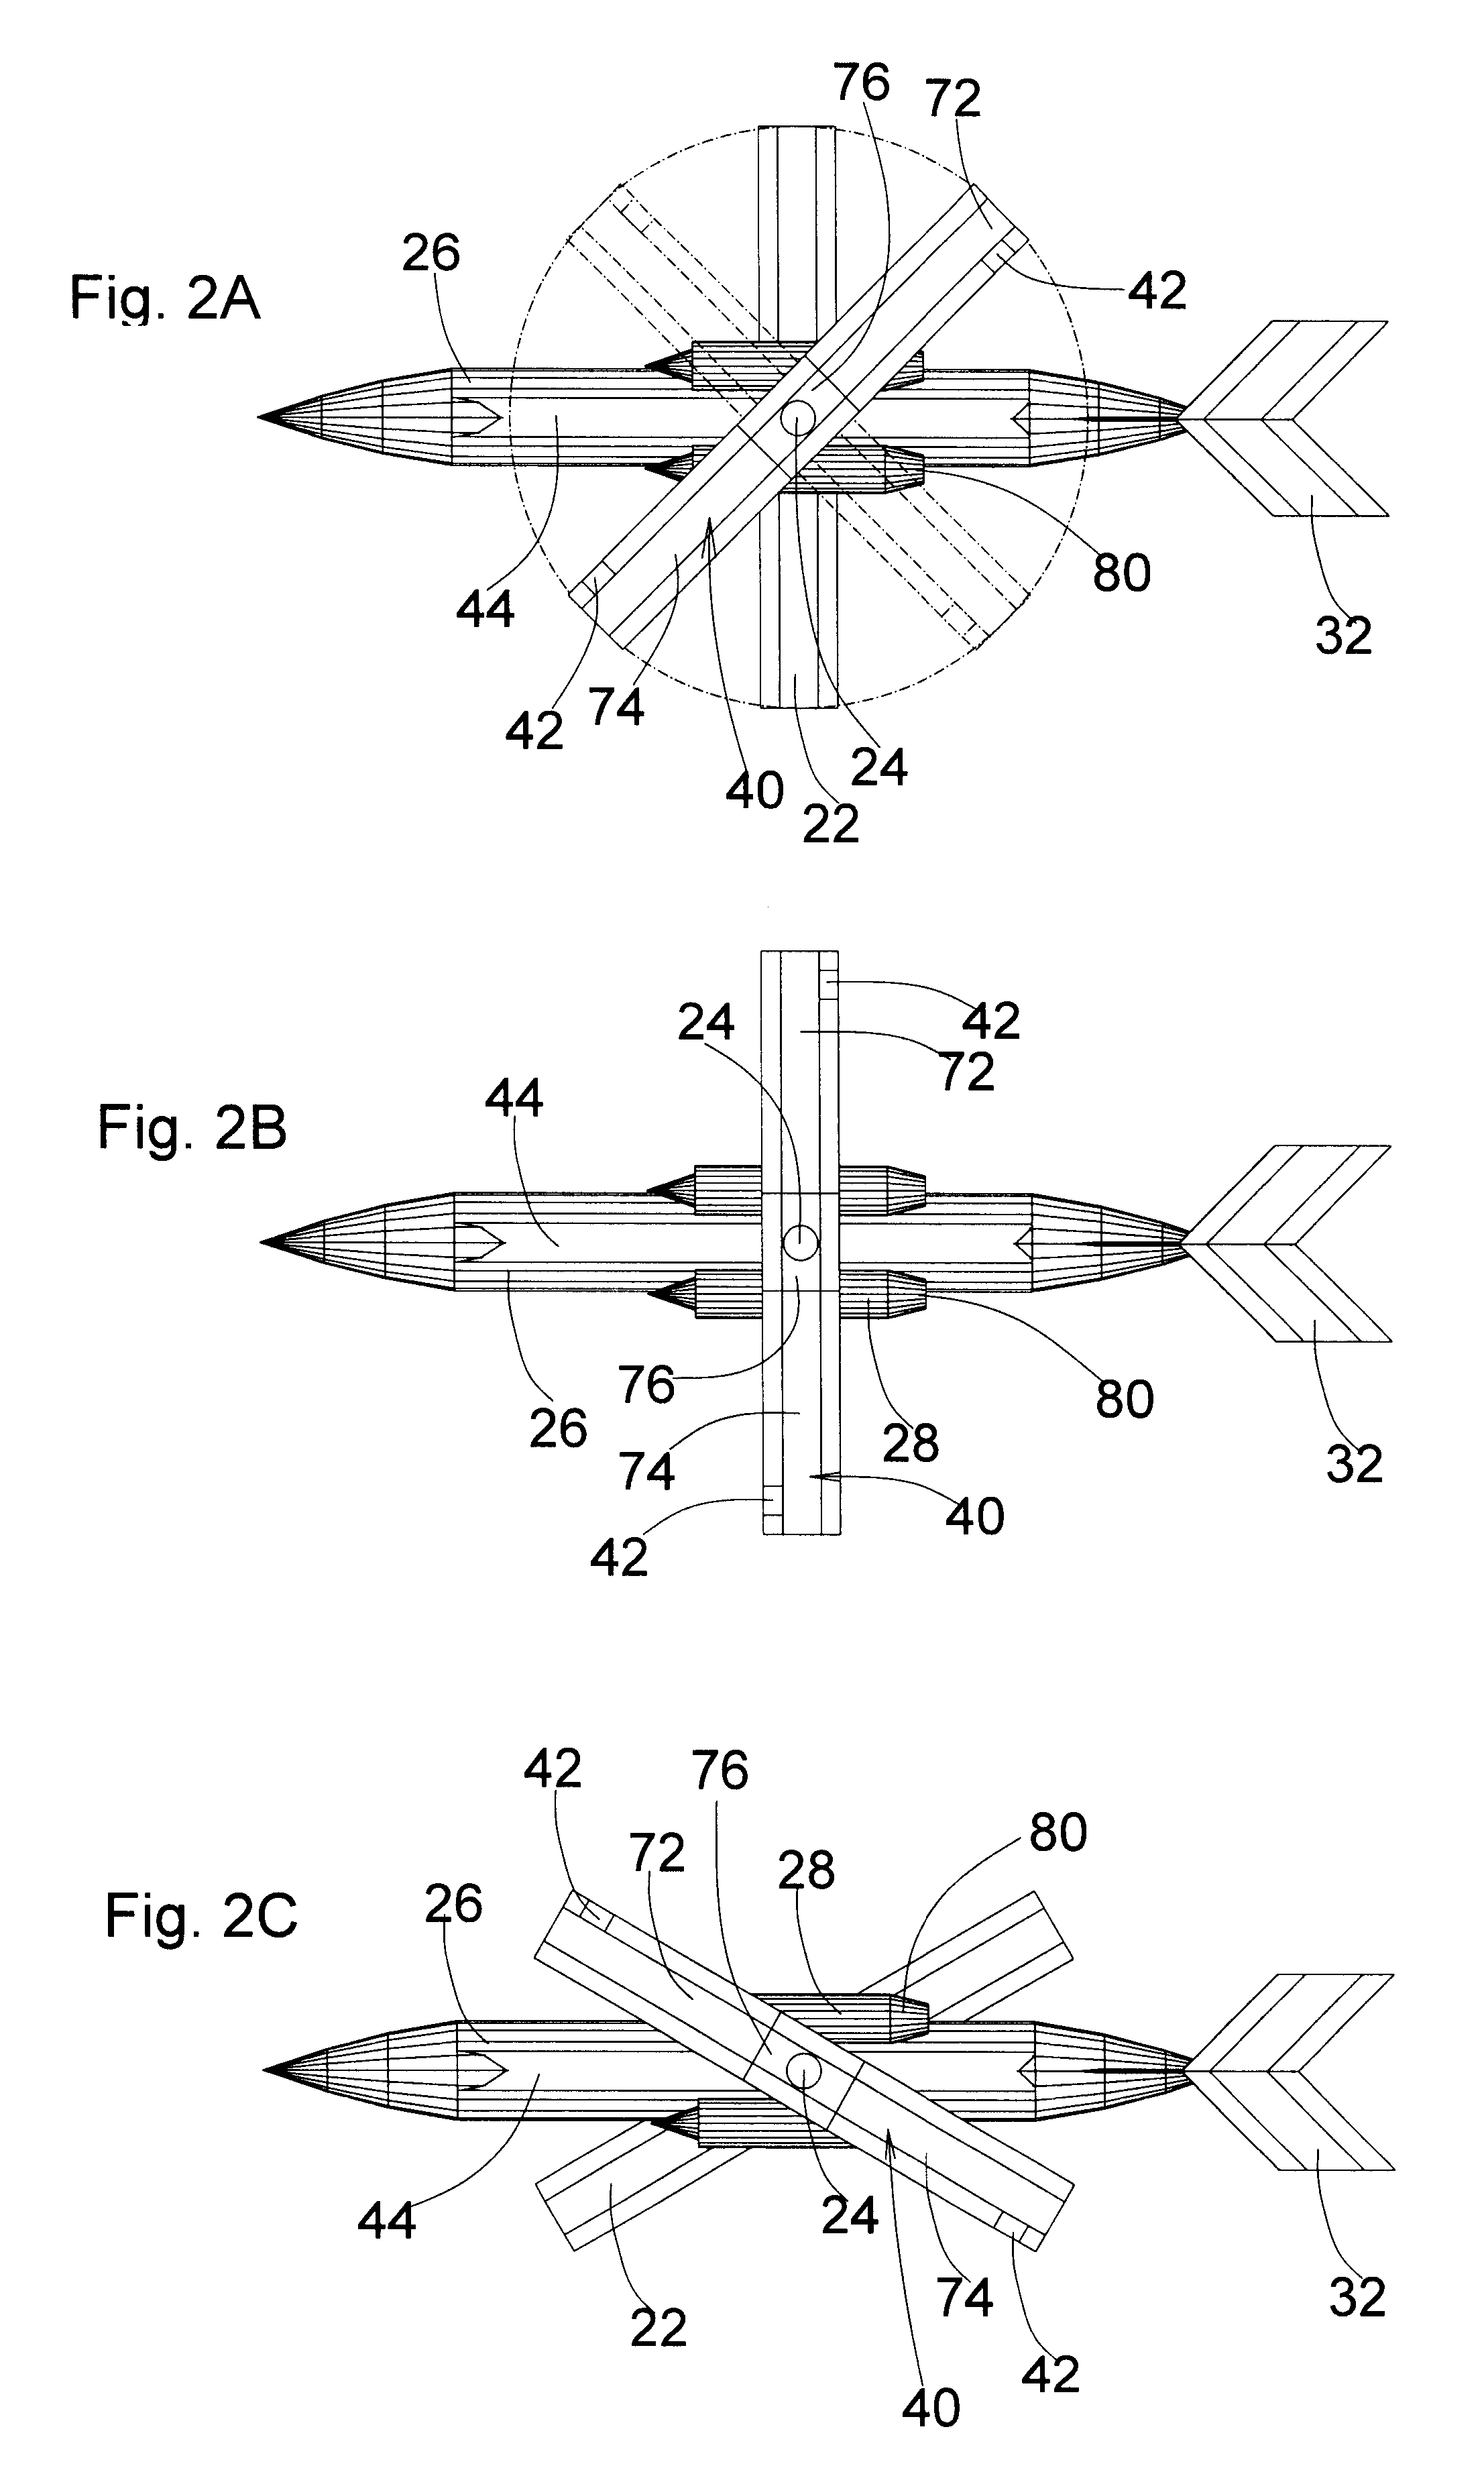 Air vehicle having rotor/scissors wing